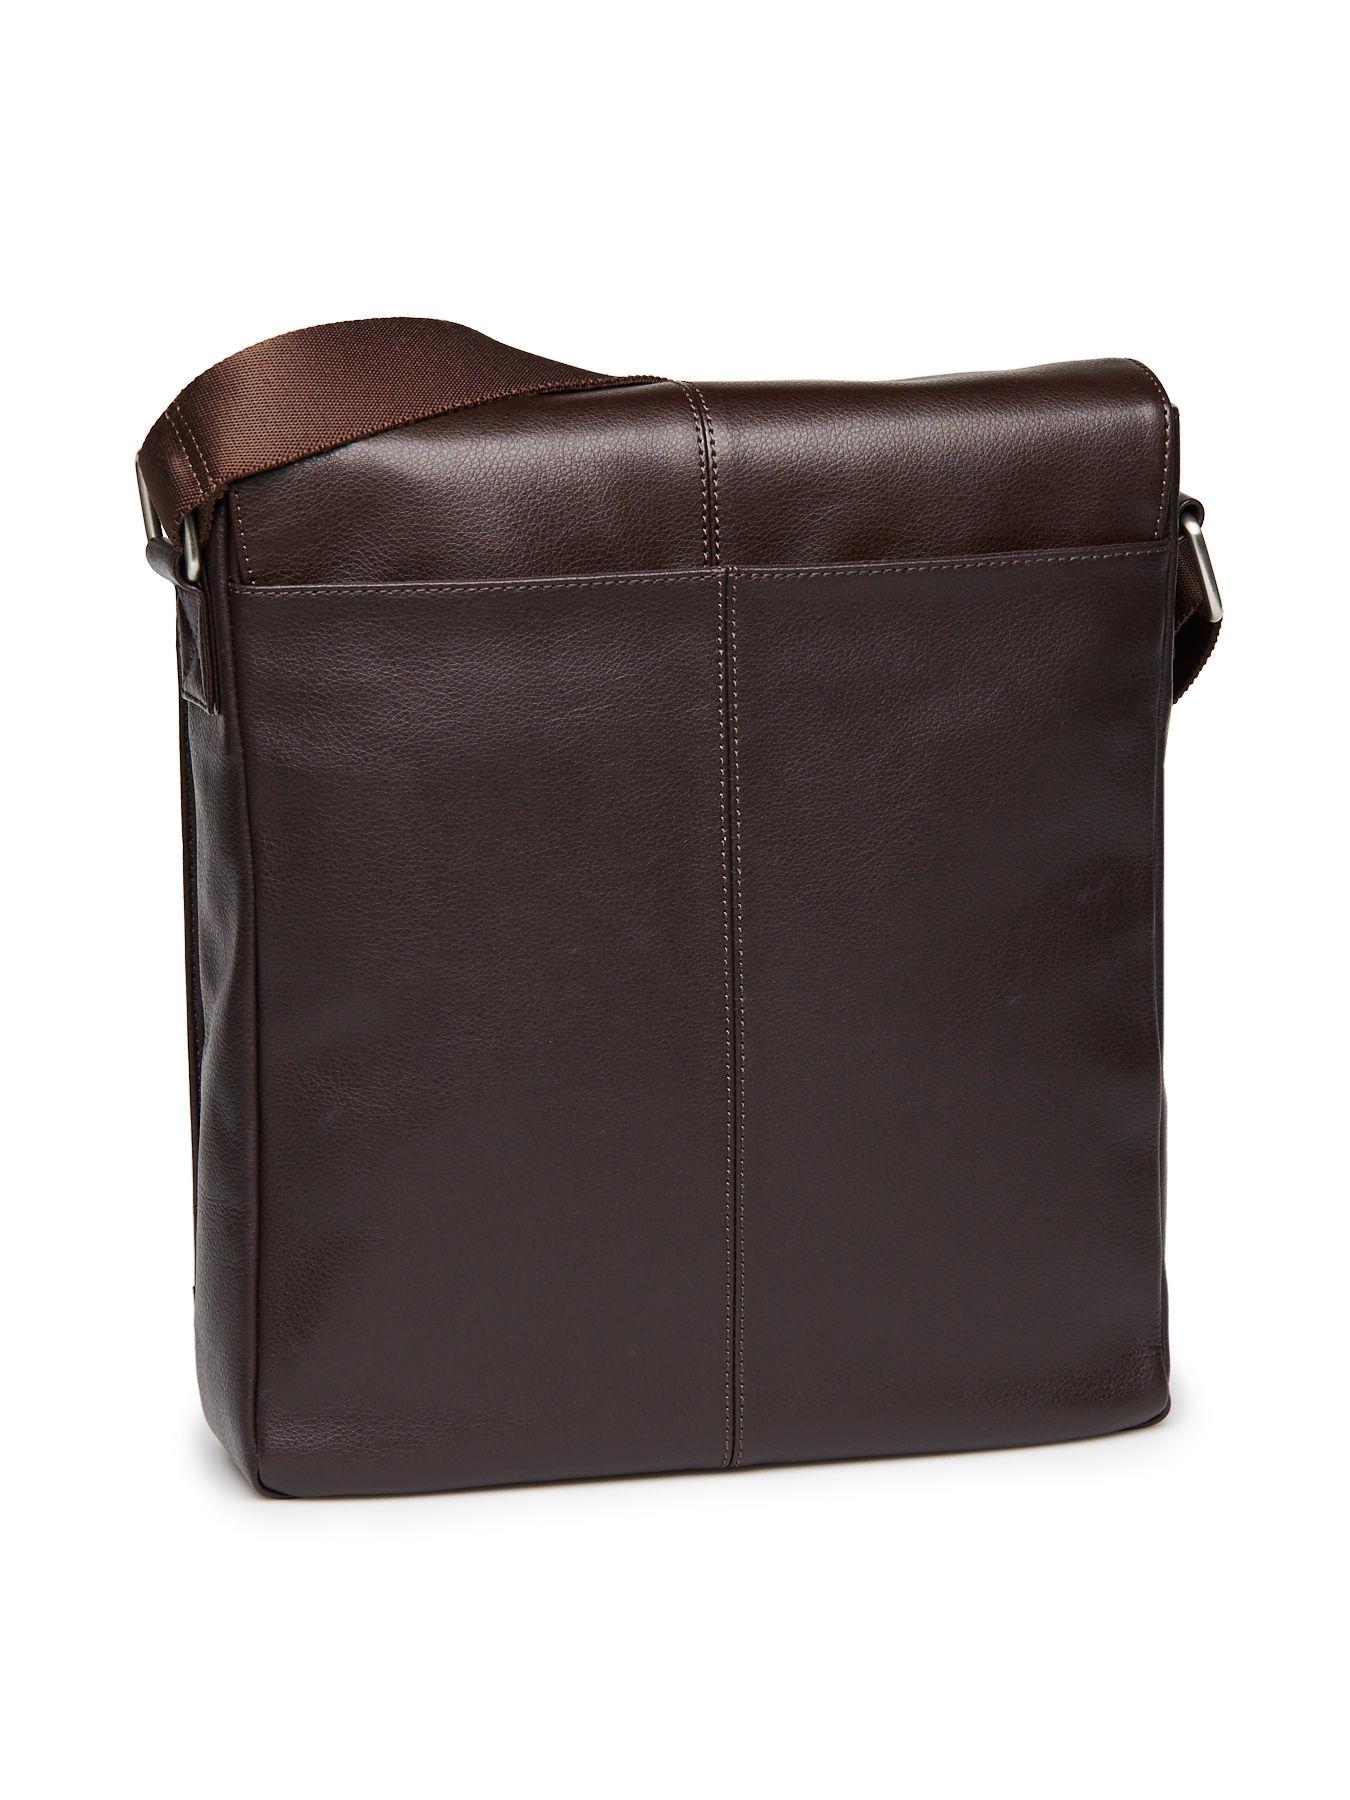 Lyst - Perry Ellis Leather Crossbody Bag in Brown for Men